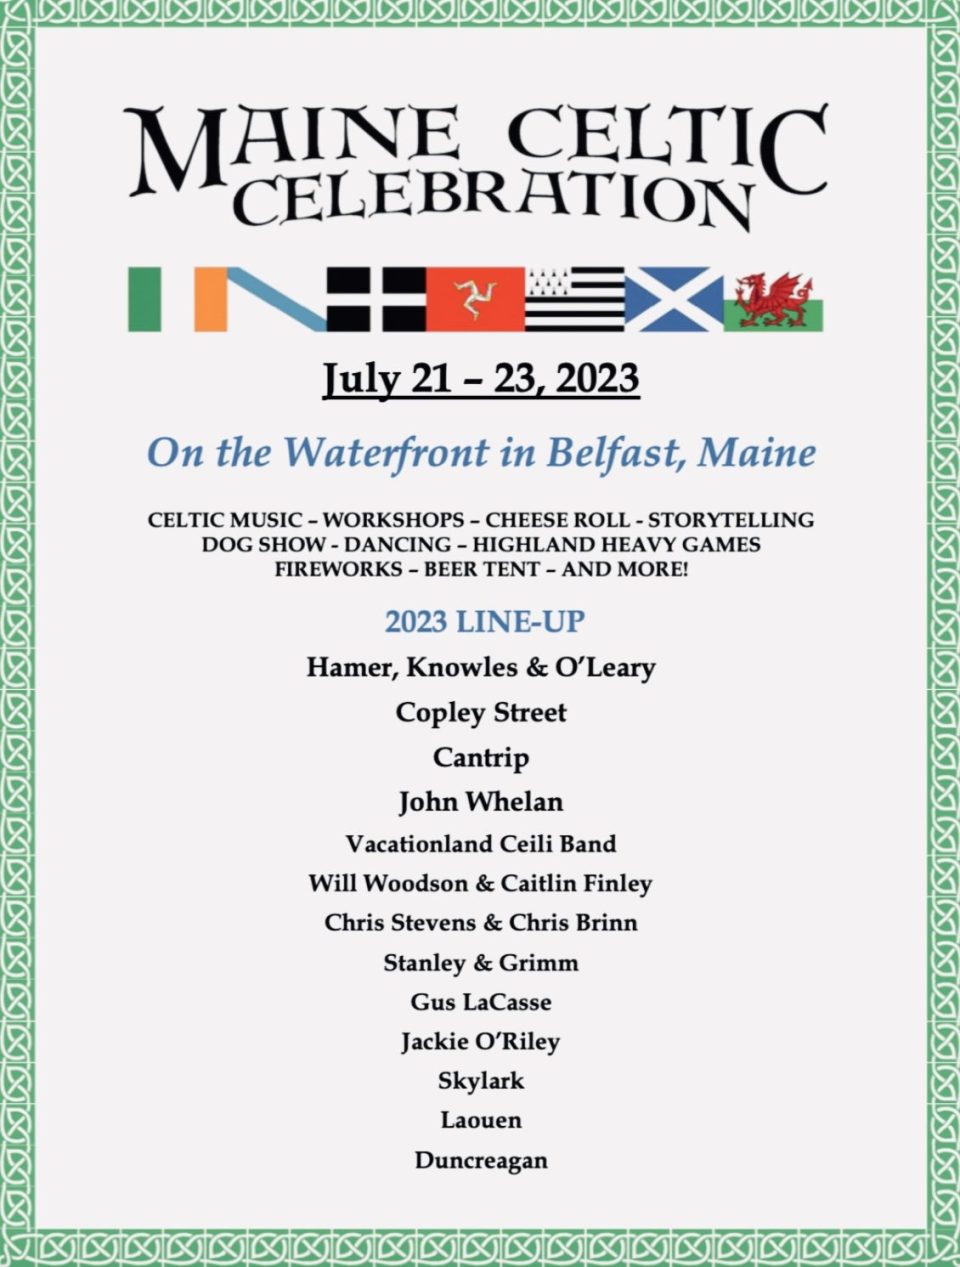 Maine Celtic Celebration Visit Maine